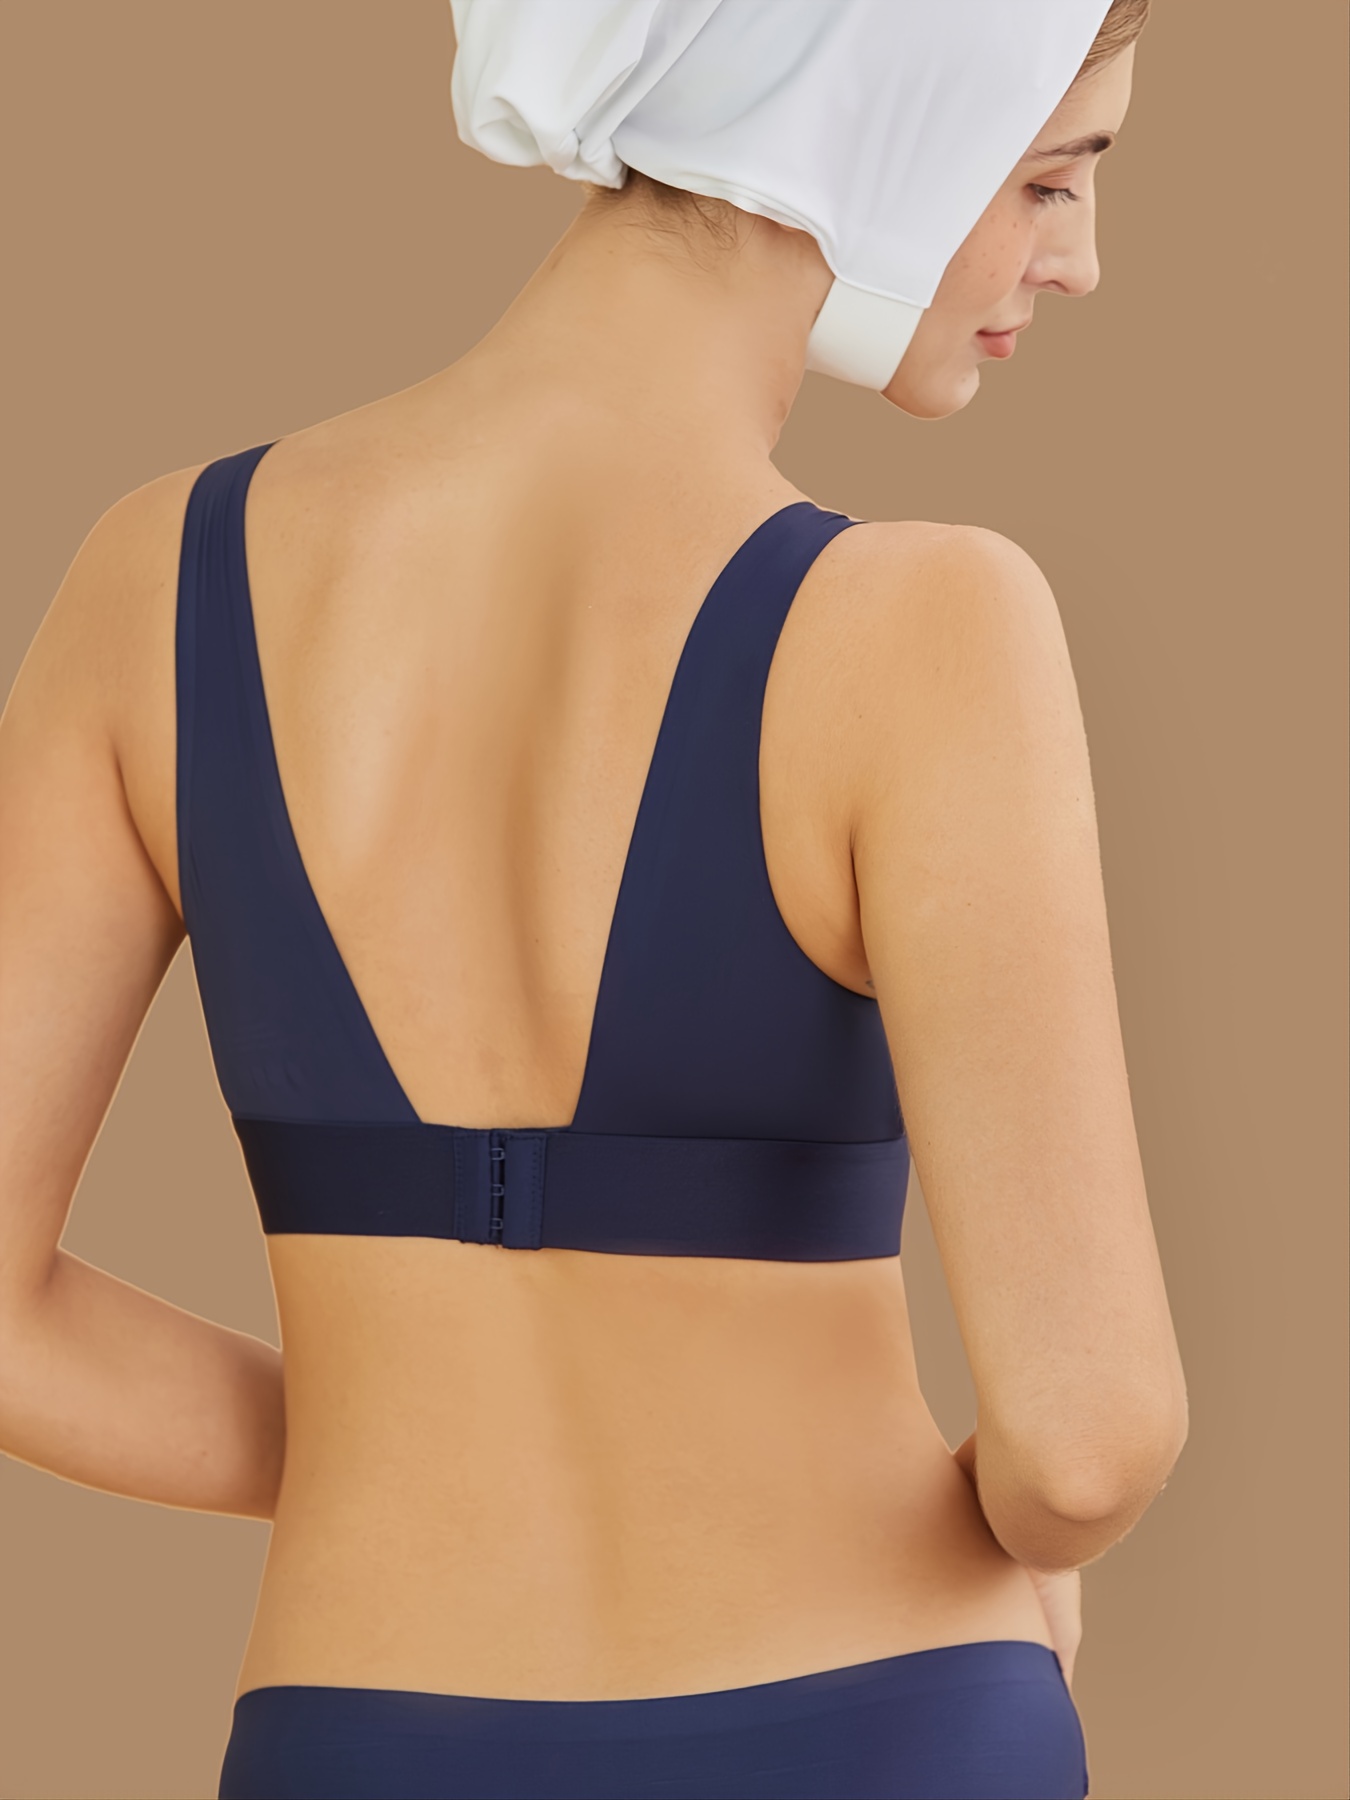 FINETOO Bralettes for Women Wireless Bra Sexy Triangle Deep V Neck